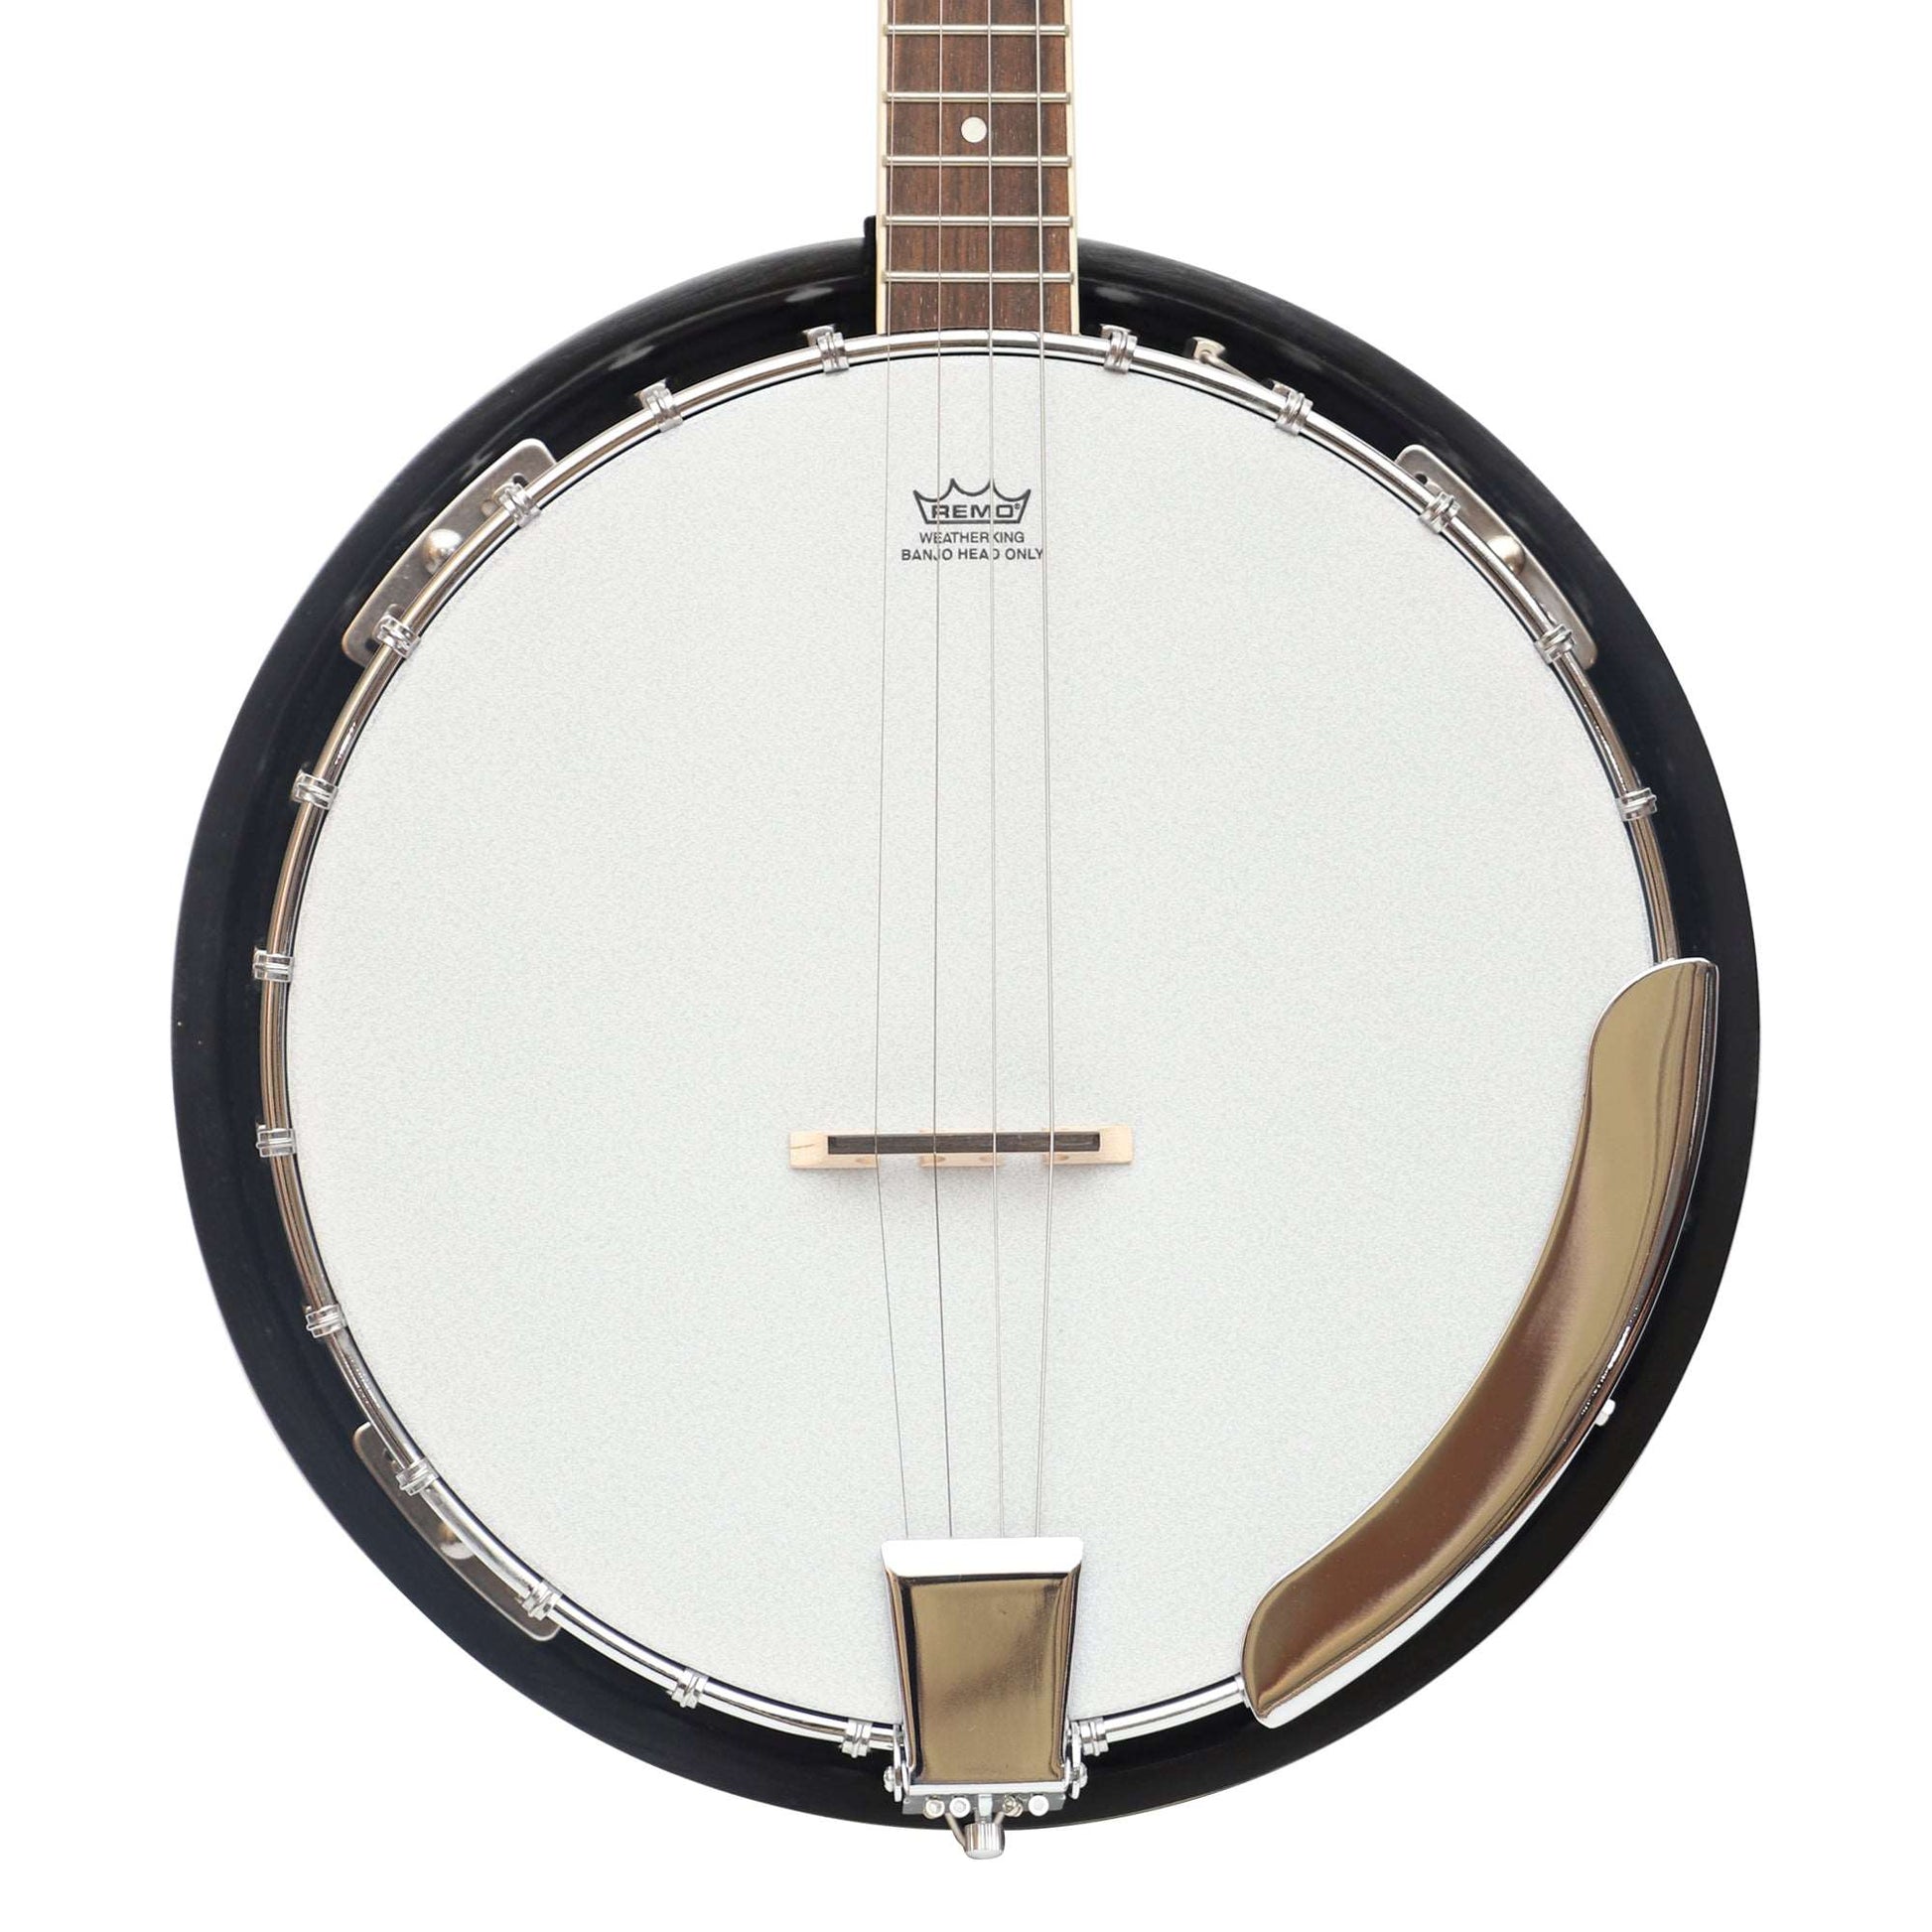 Heartland 4 String Banjo Closed Solid Back 17 Fret, Left Handed 4 String Irish Tenor Banjo Short Scale